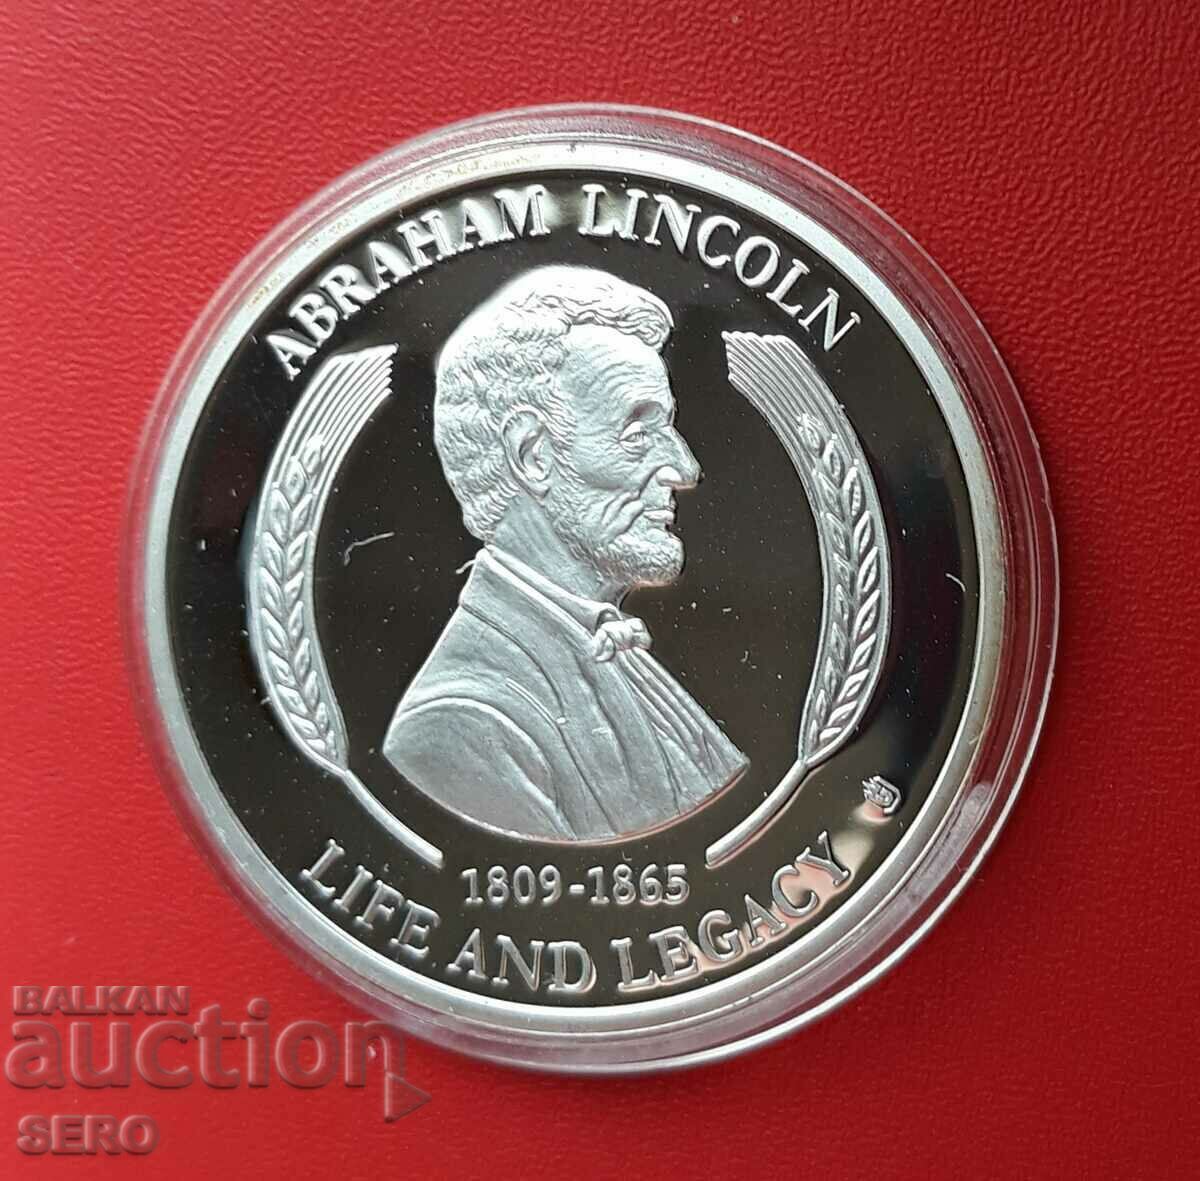 USA-Medal-Abraham Lincoln 1809-1865